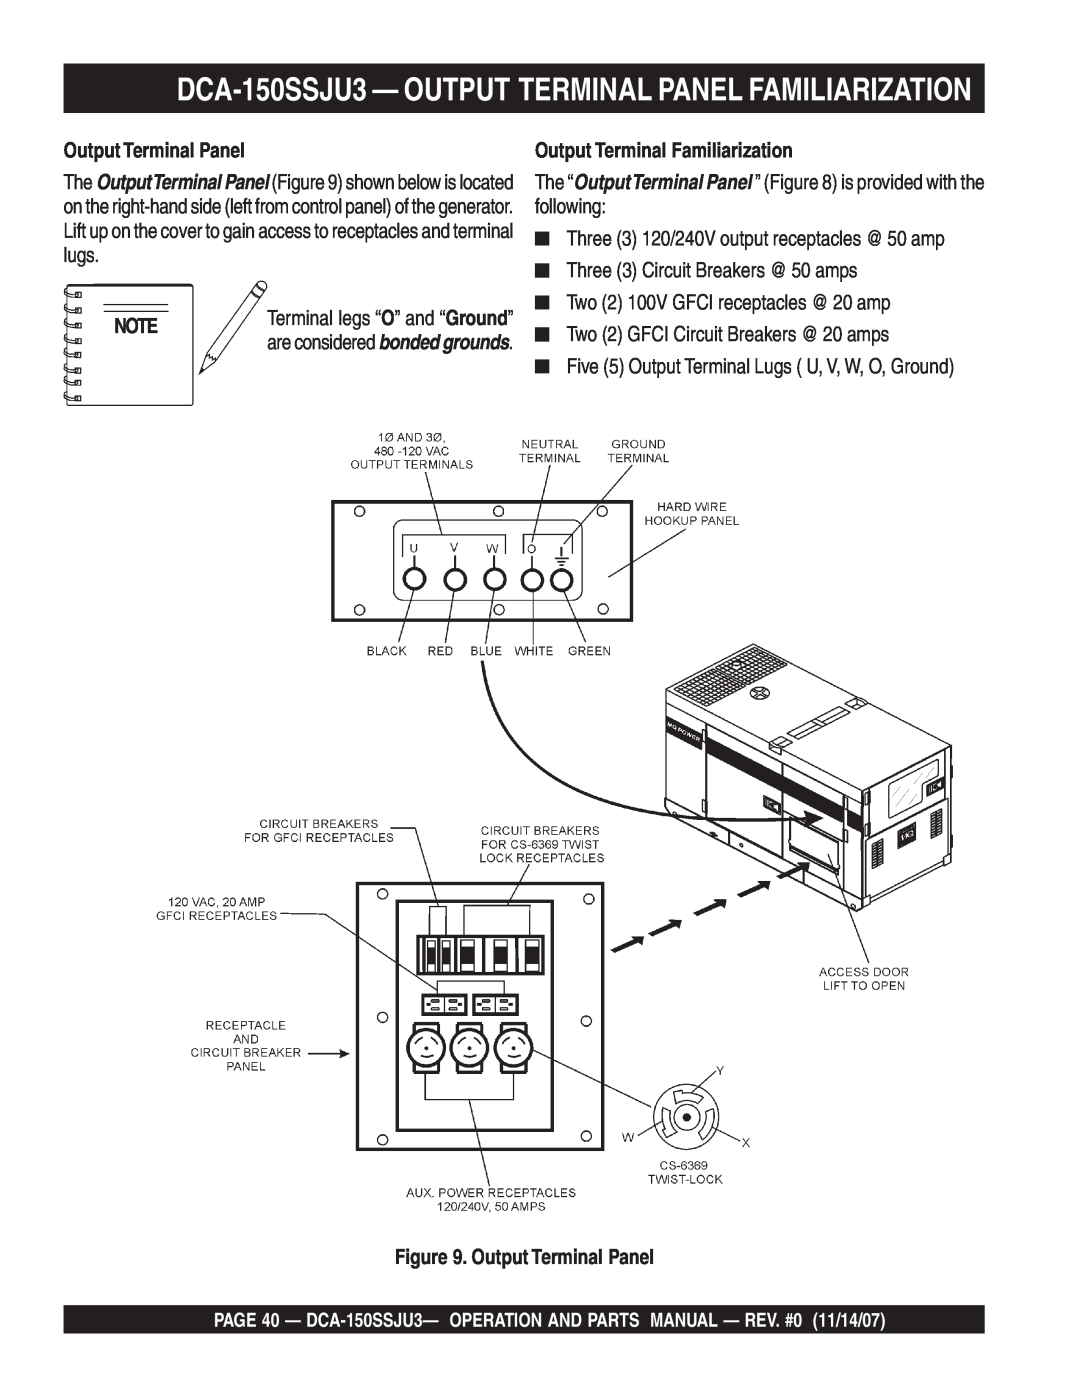 Multiquip DCA-150SSJU3 operation manual Output Terminal Familiarization, Output Terminal Panel 